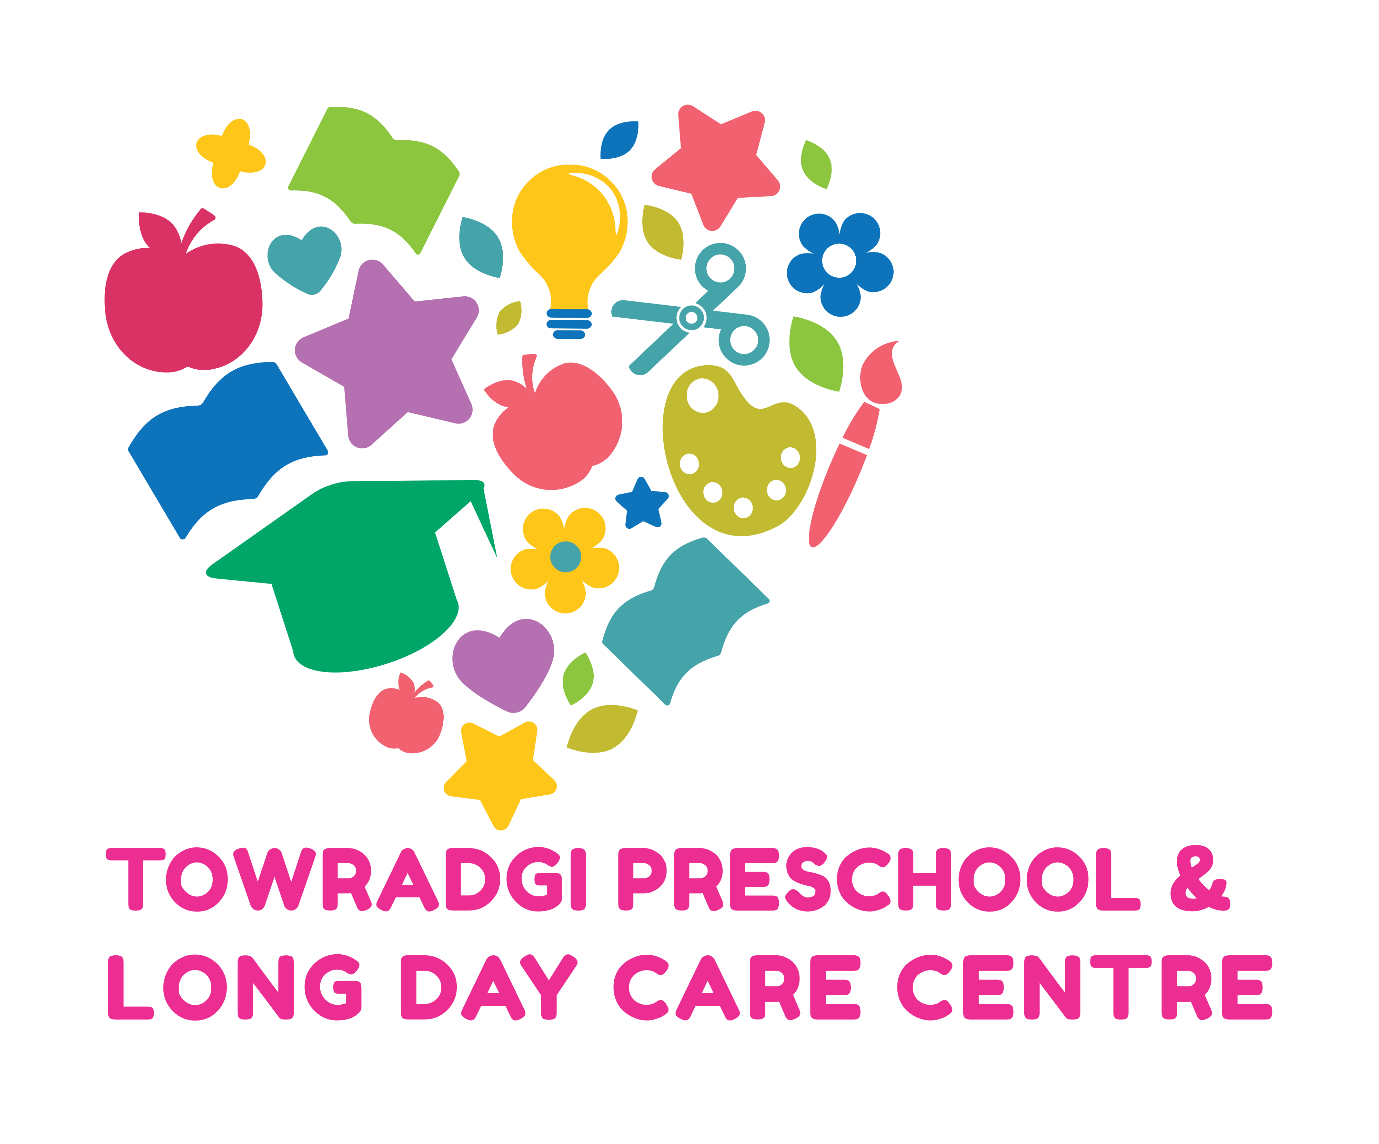 Leading Childcare Centre In Towradgi